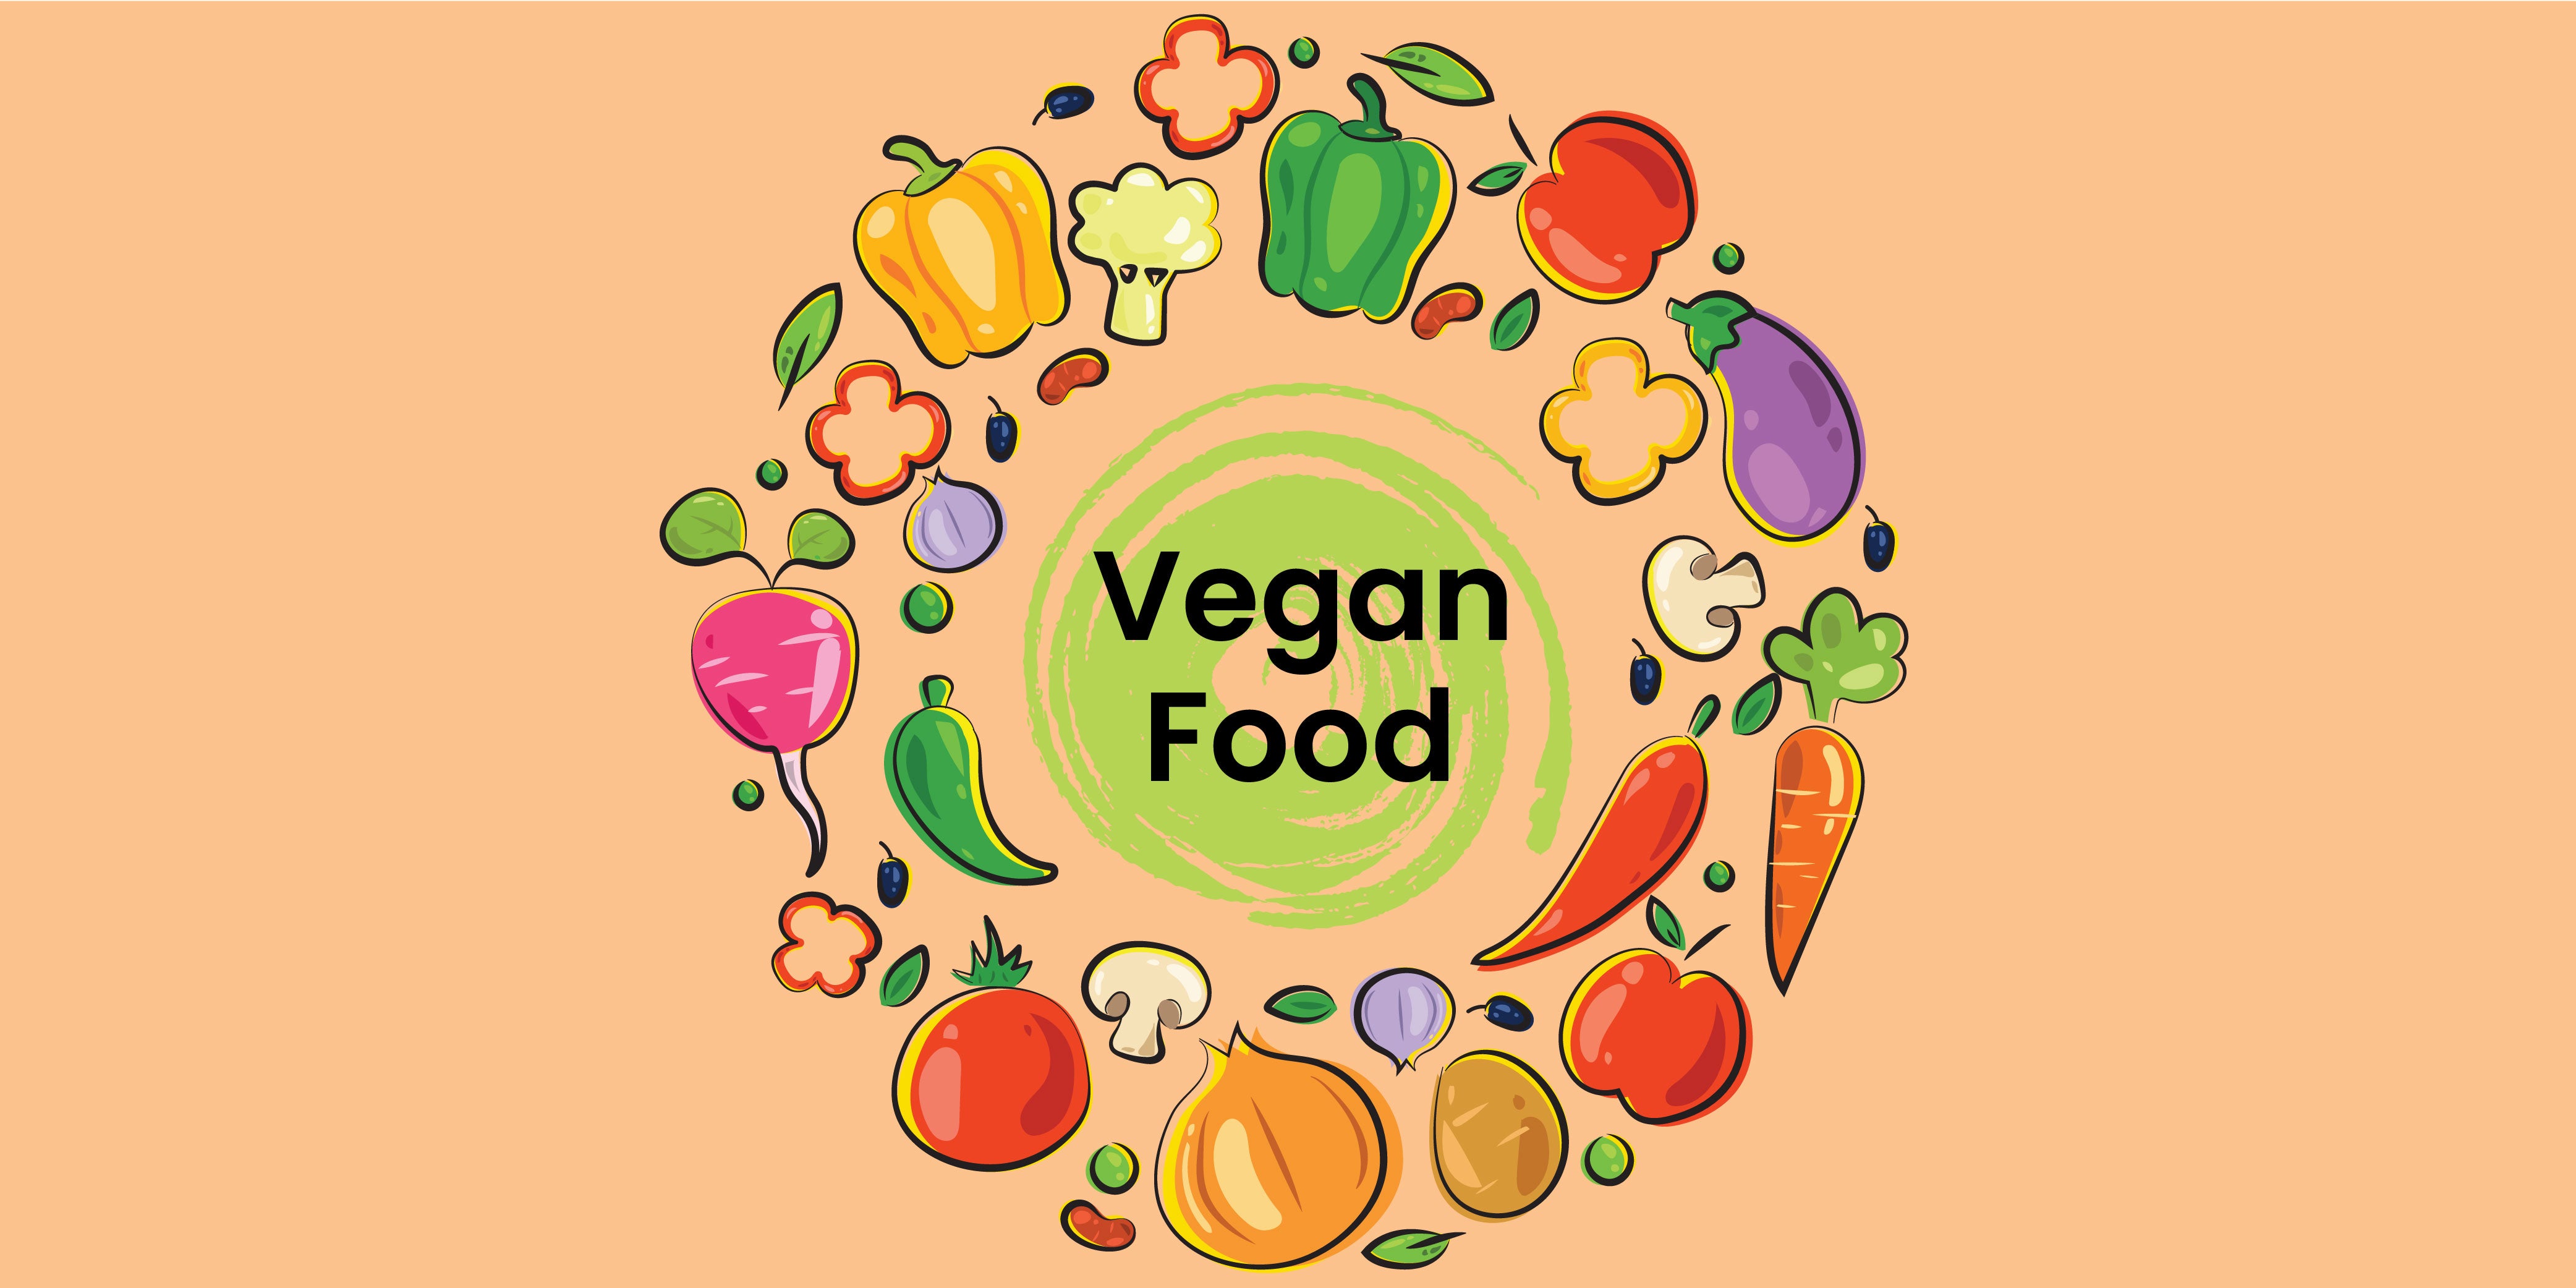 Six vegan superfoods